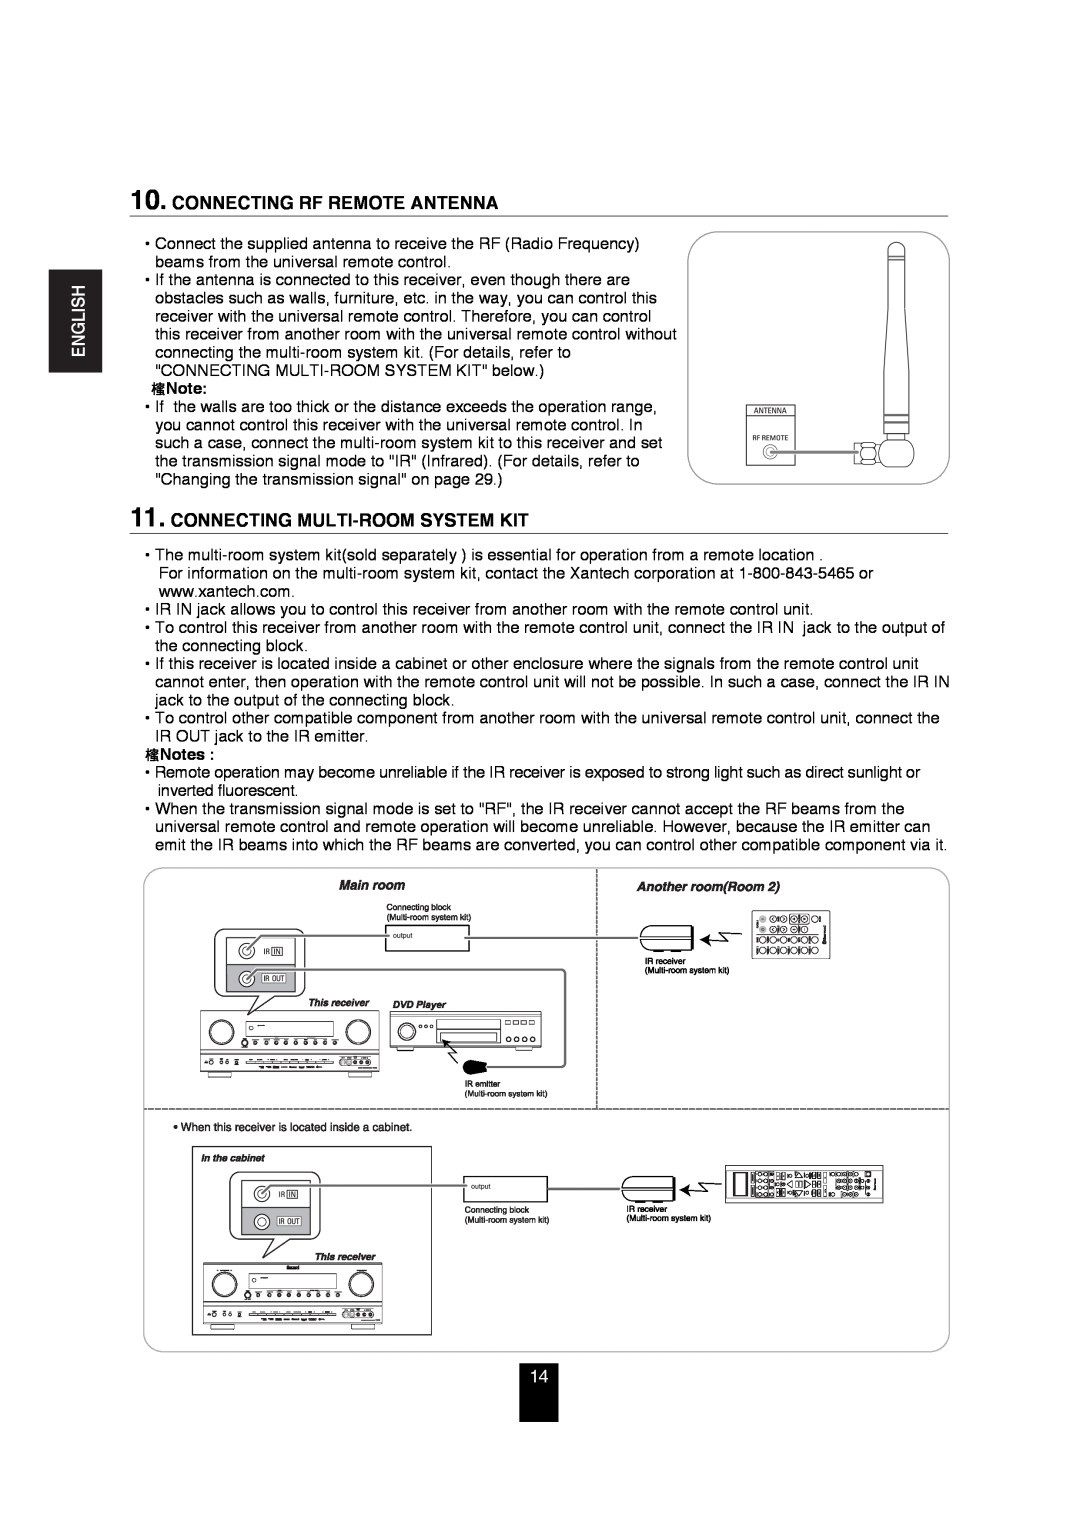 Sherwood R-872 manual Connecting Rf Remote Antenna, Connecting Multi-Roomsystem Kit, English 